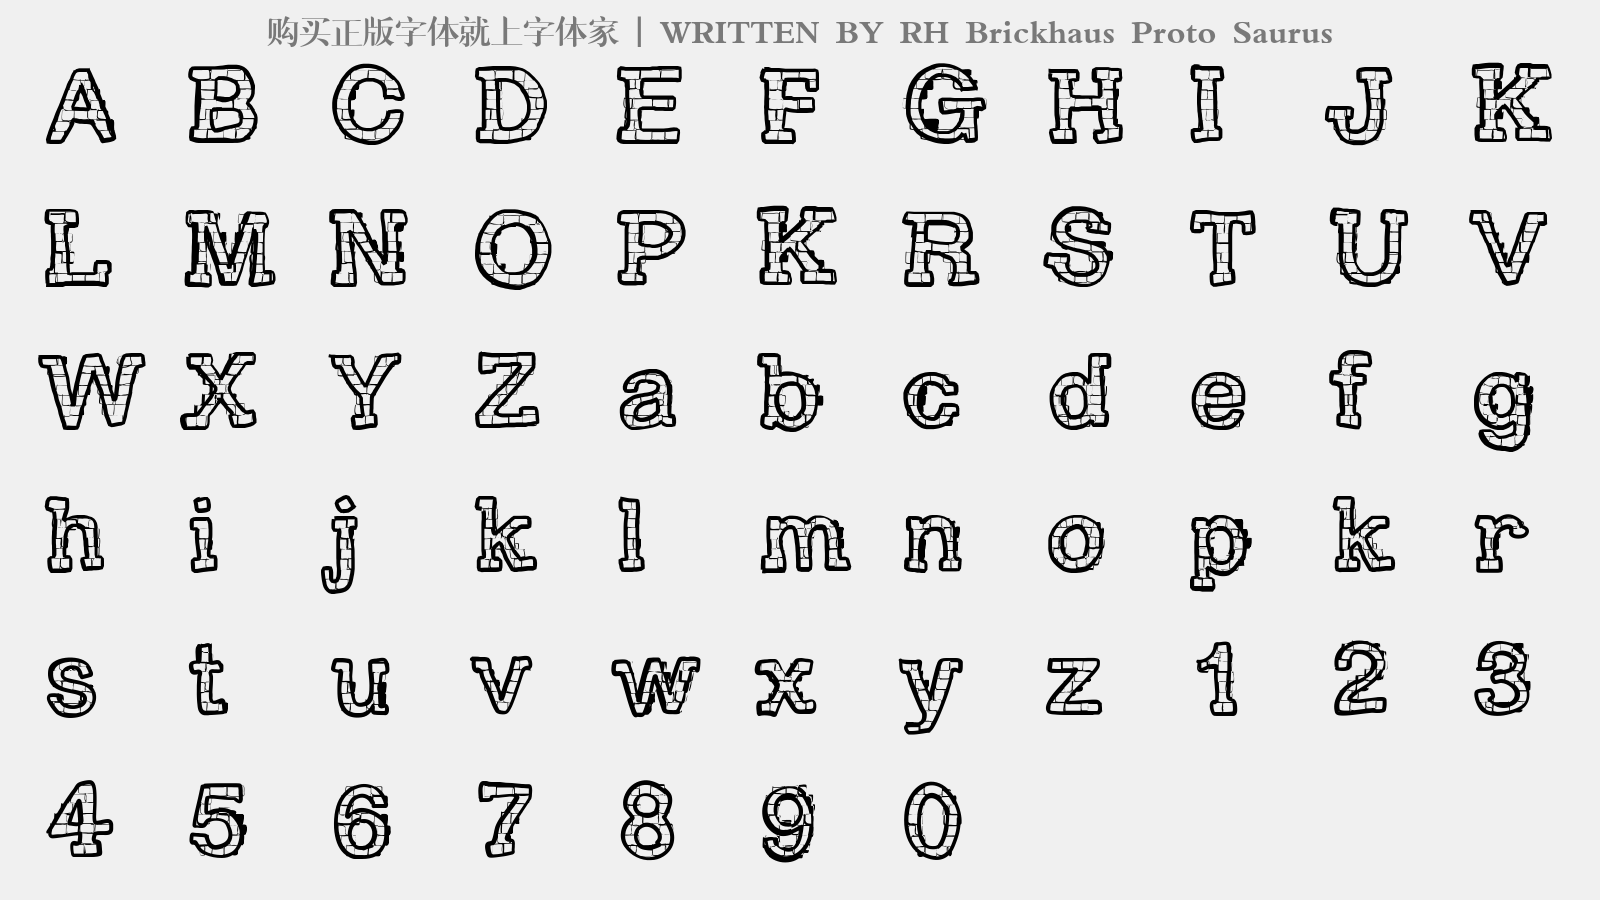 RH Brickhaus Proto Saurus - 大写字母/小写字母/数字